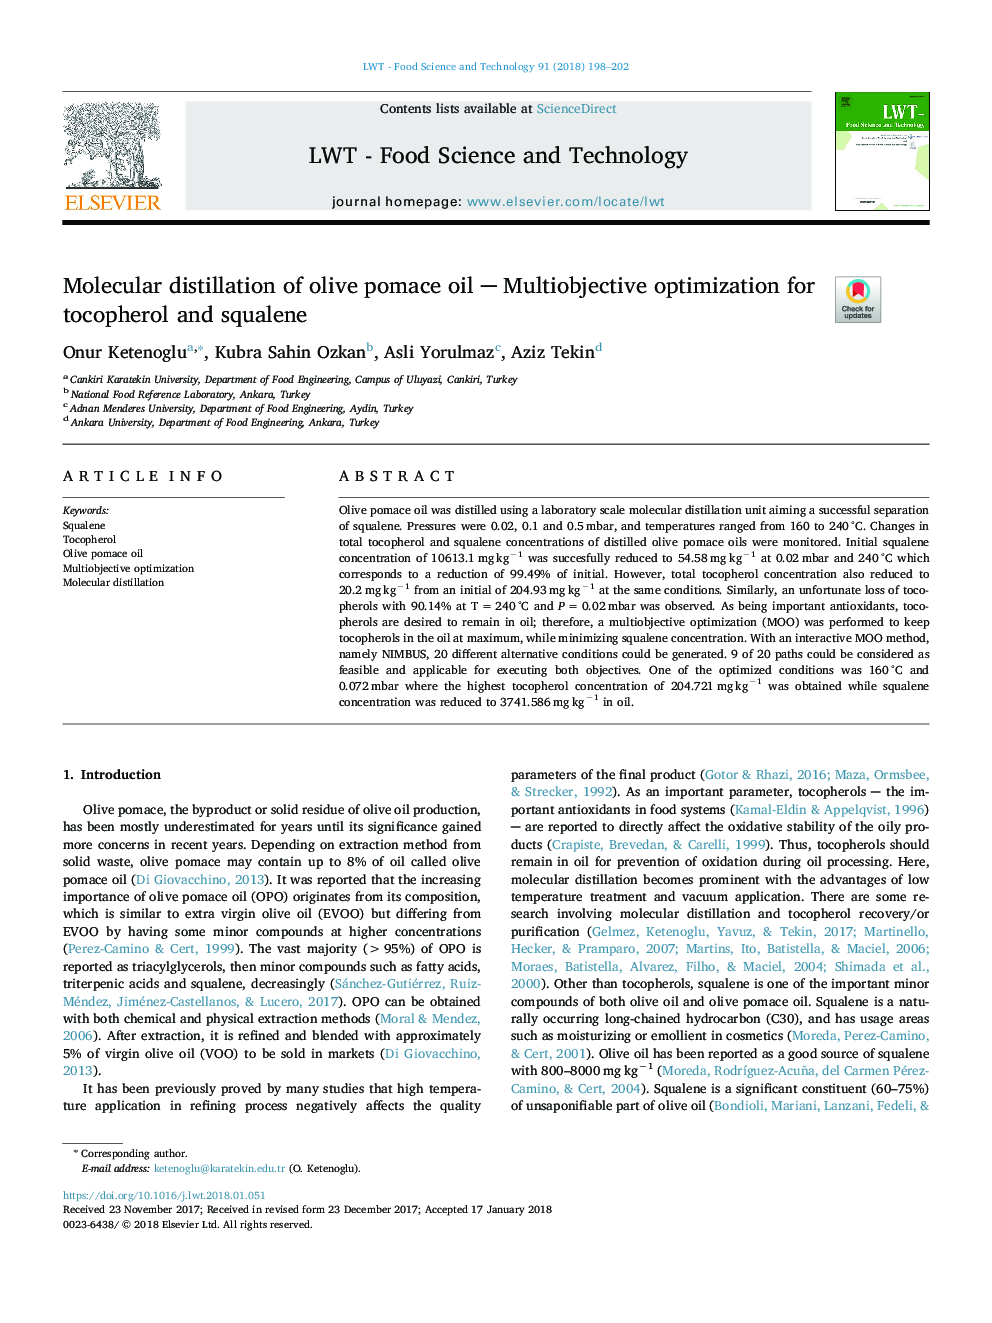 Molecular distillation of olive pomace oil â Multiobjective optimization for tocopherol and squalene